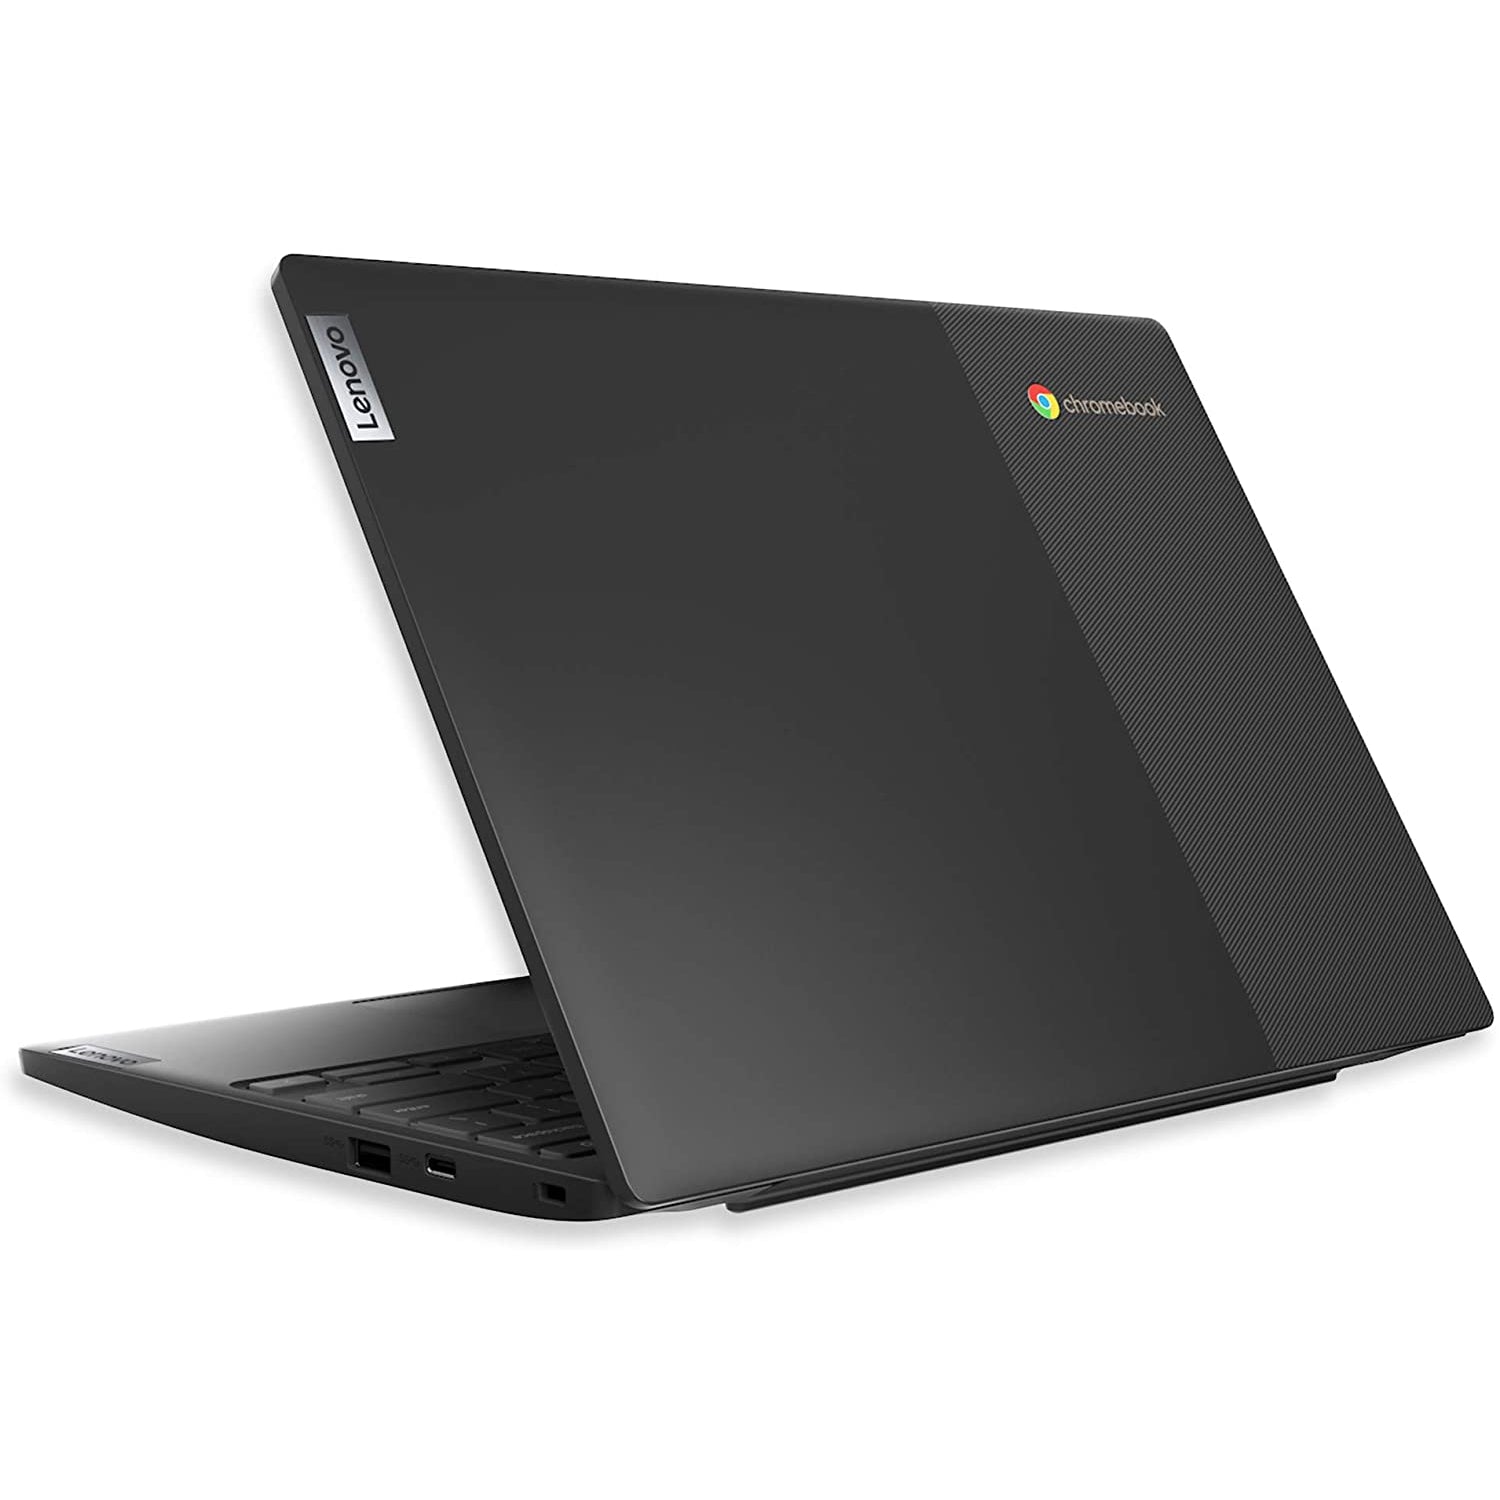 Lenovo Ideapad 1 11IGL05 Laptop - Intel Celeron N4020, 64GB eMMC, 4GB RAM, 11.6" Laptop